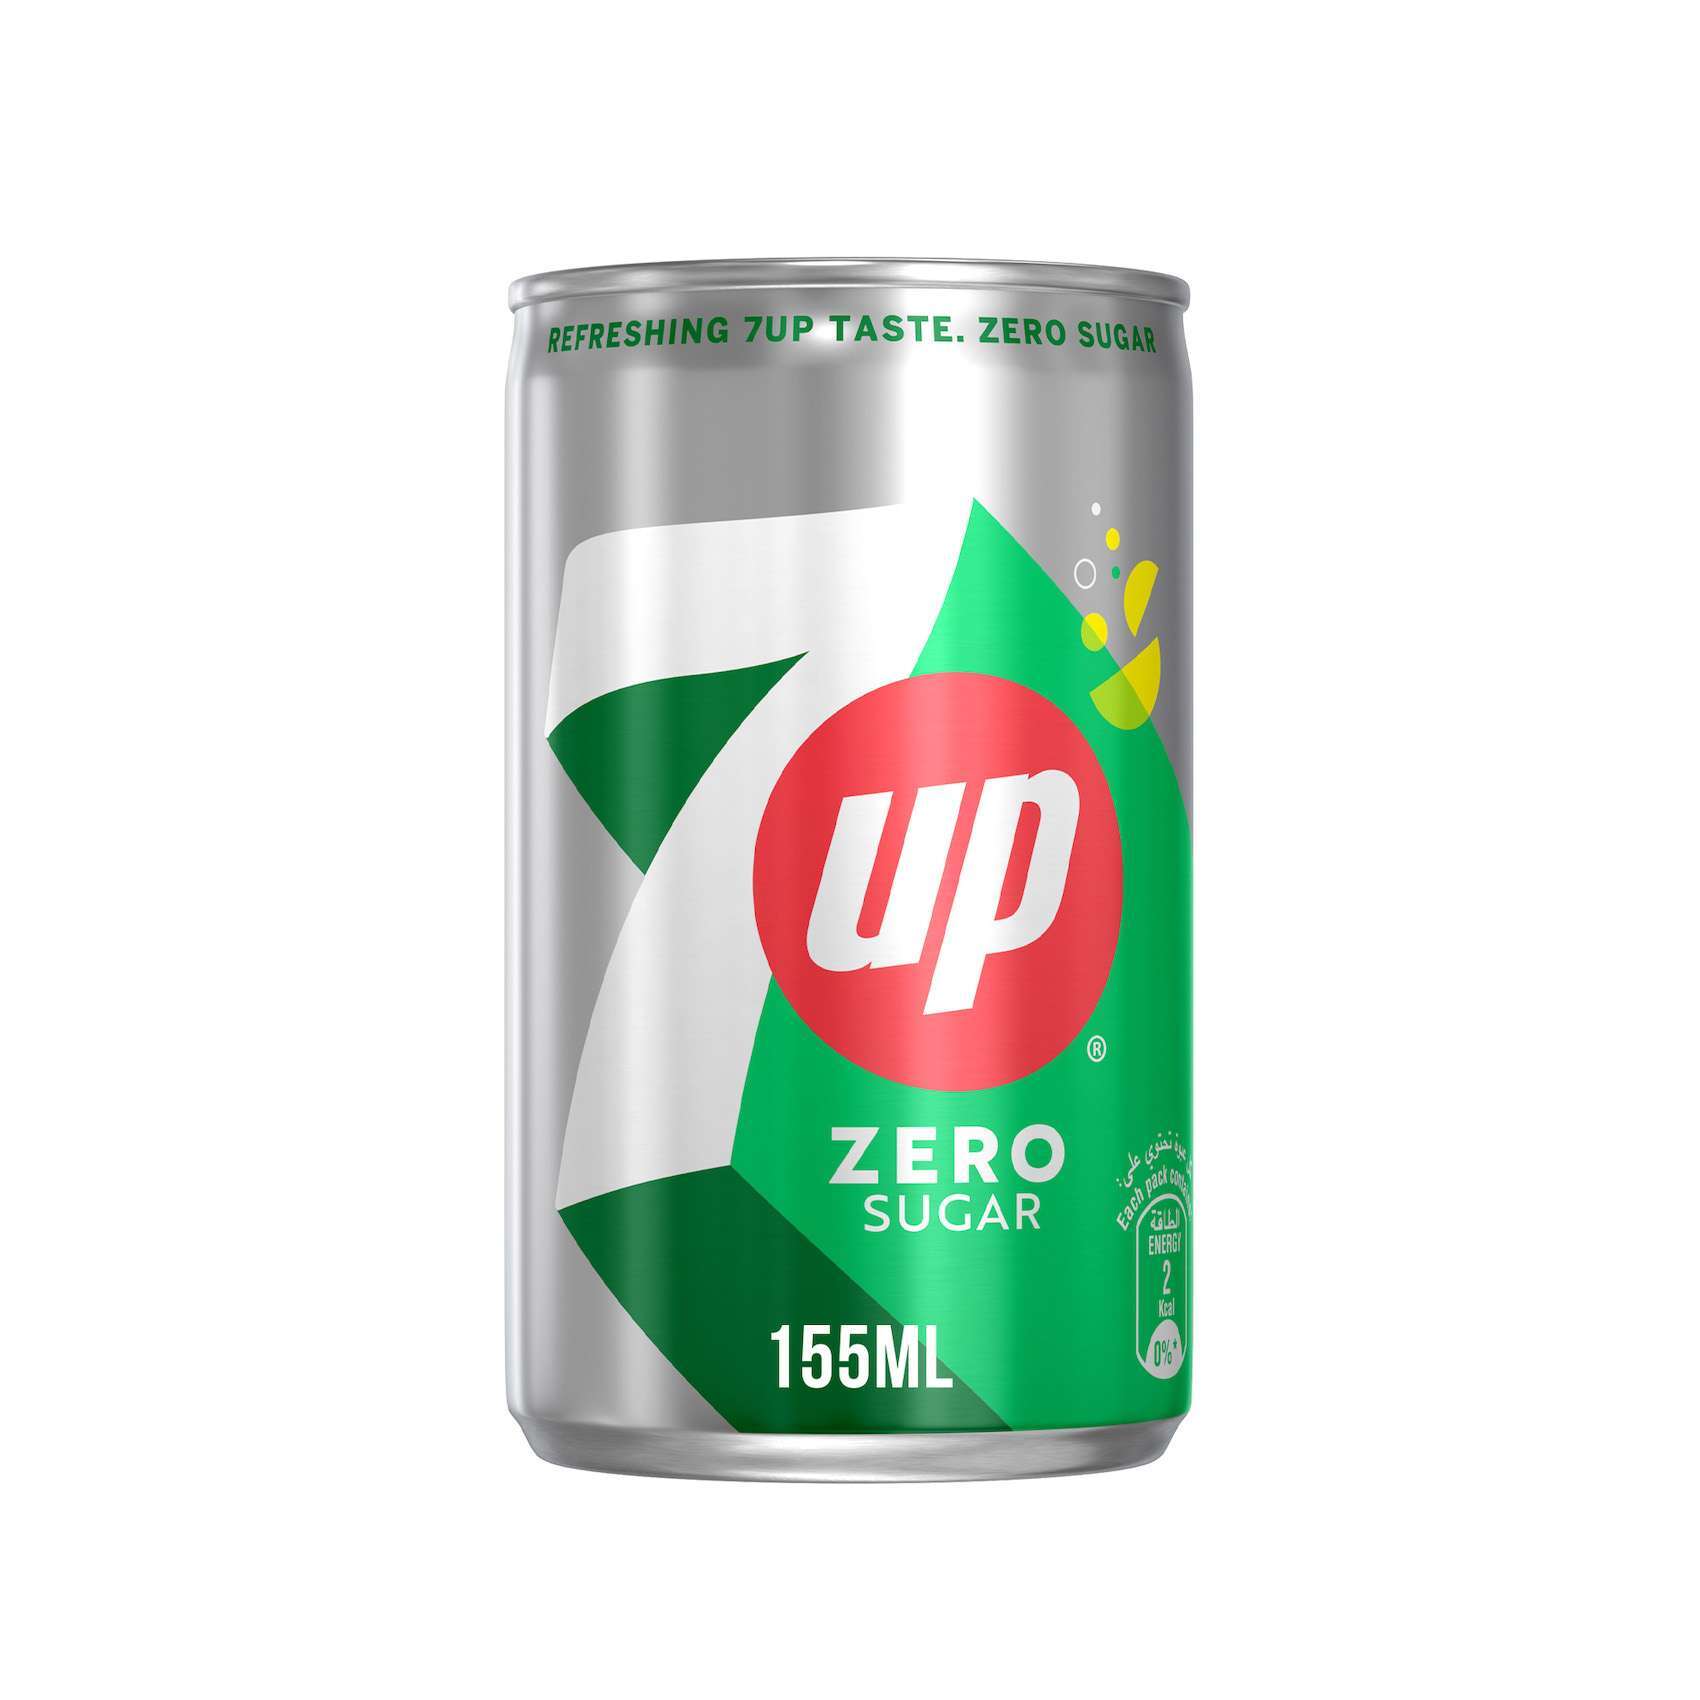 Buy 7UP Zero Zesty Lemon and Lime Flavor Zero Sugar Can 155ml